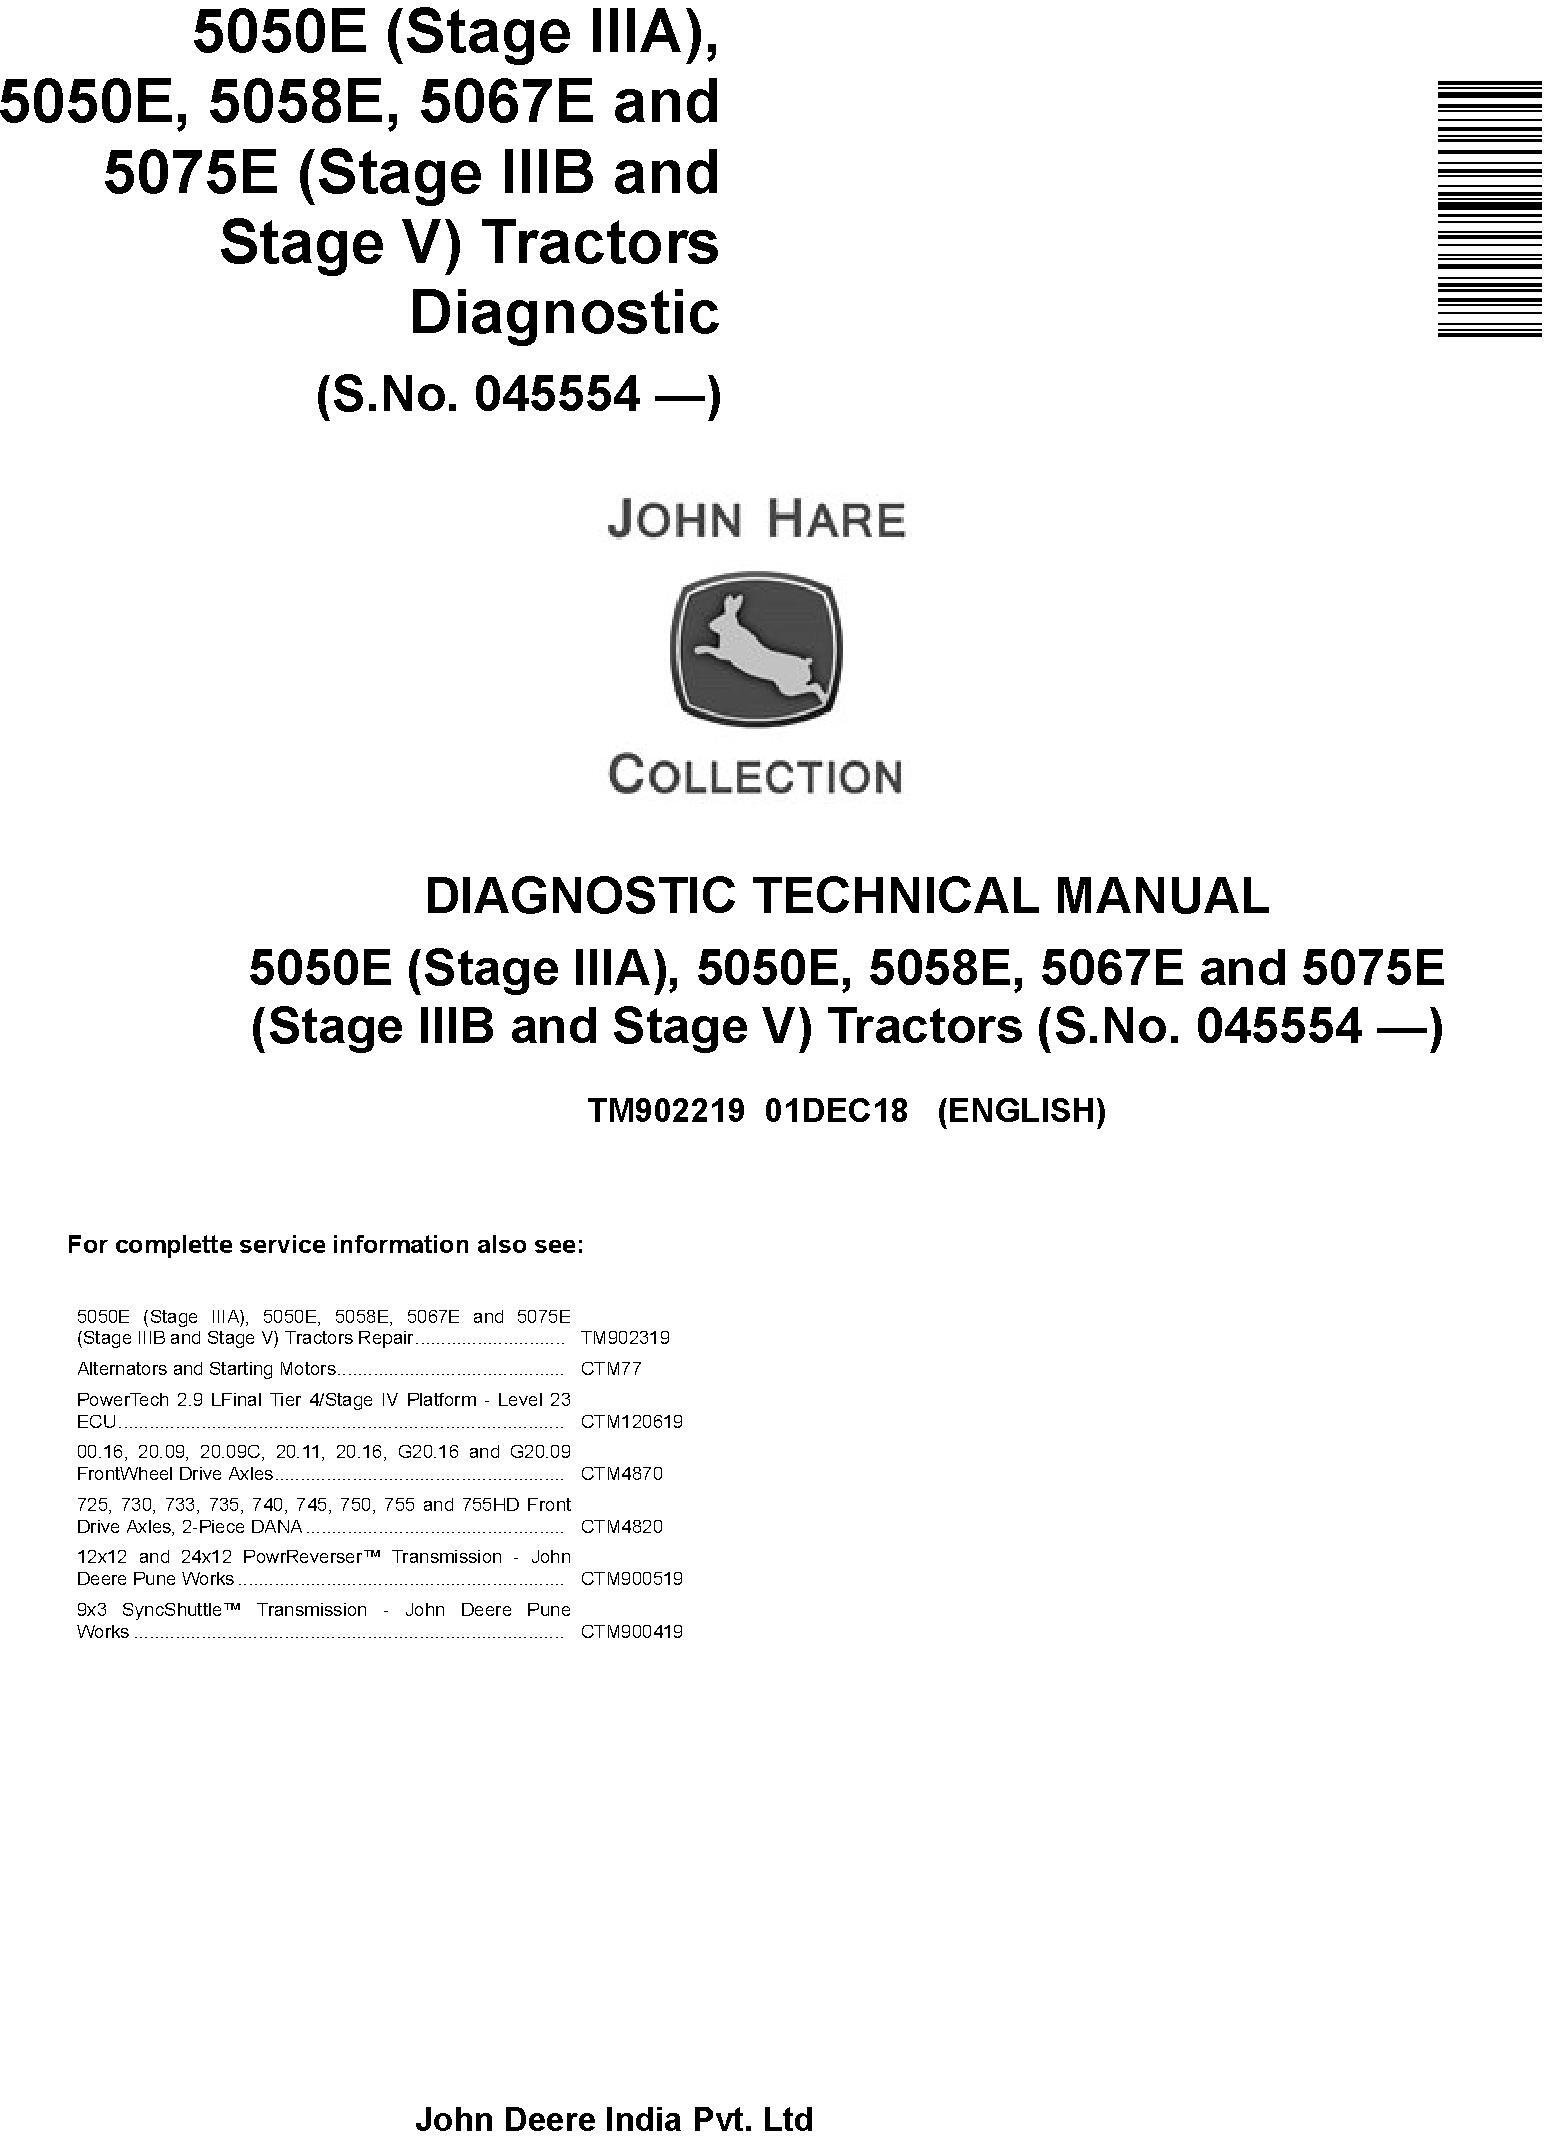 John Deere 5050E, 5050E, 5058E, 5067E, 5075E Tractors Diagnostic Technical Service Manual (TM902219) - 19123